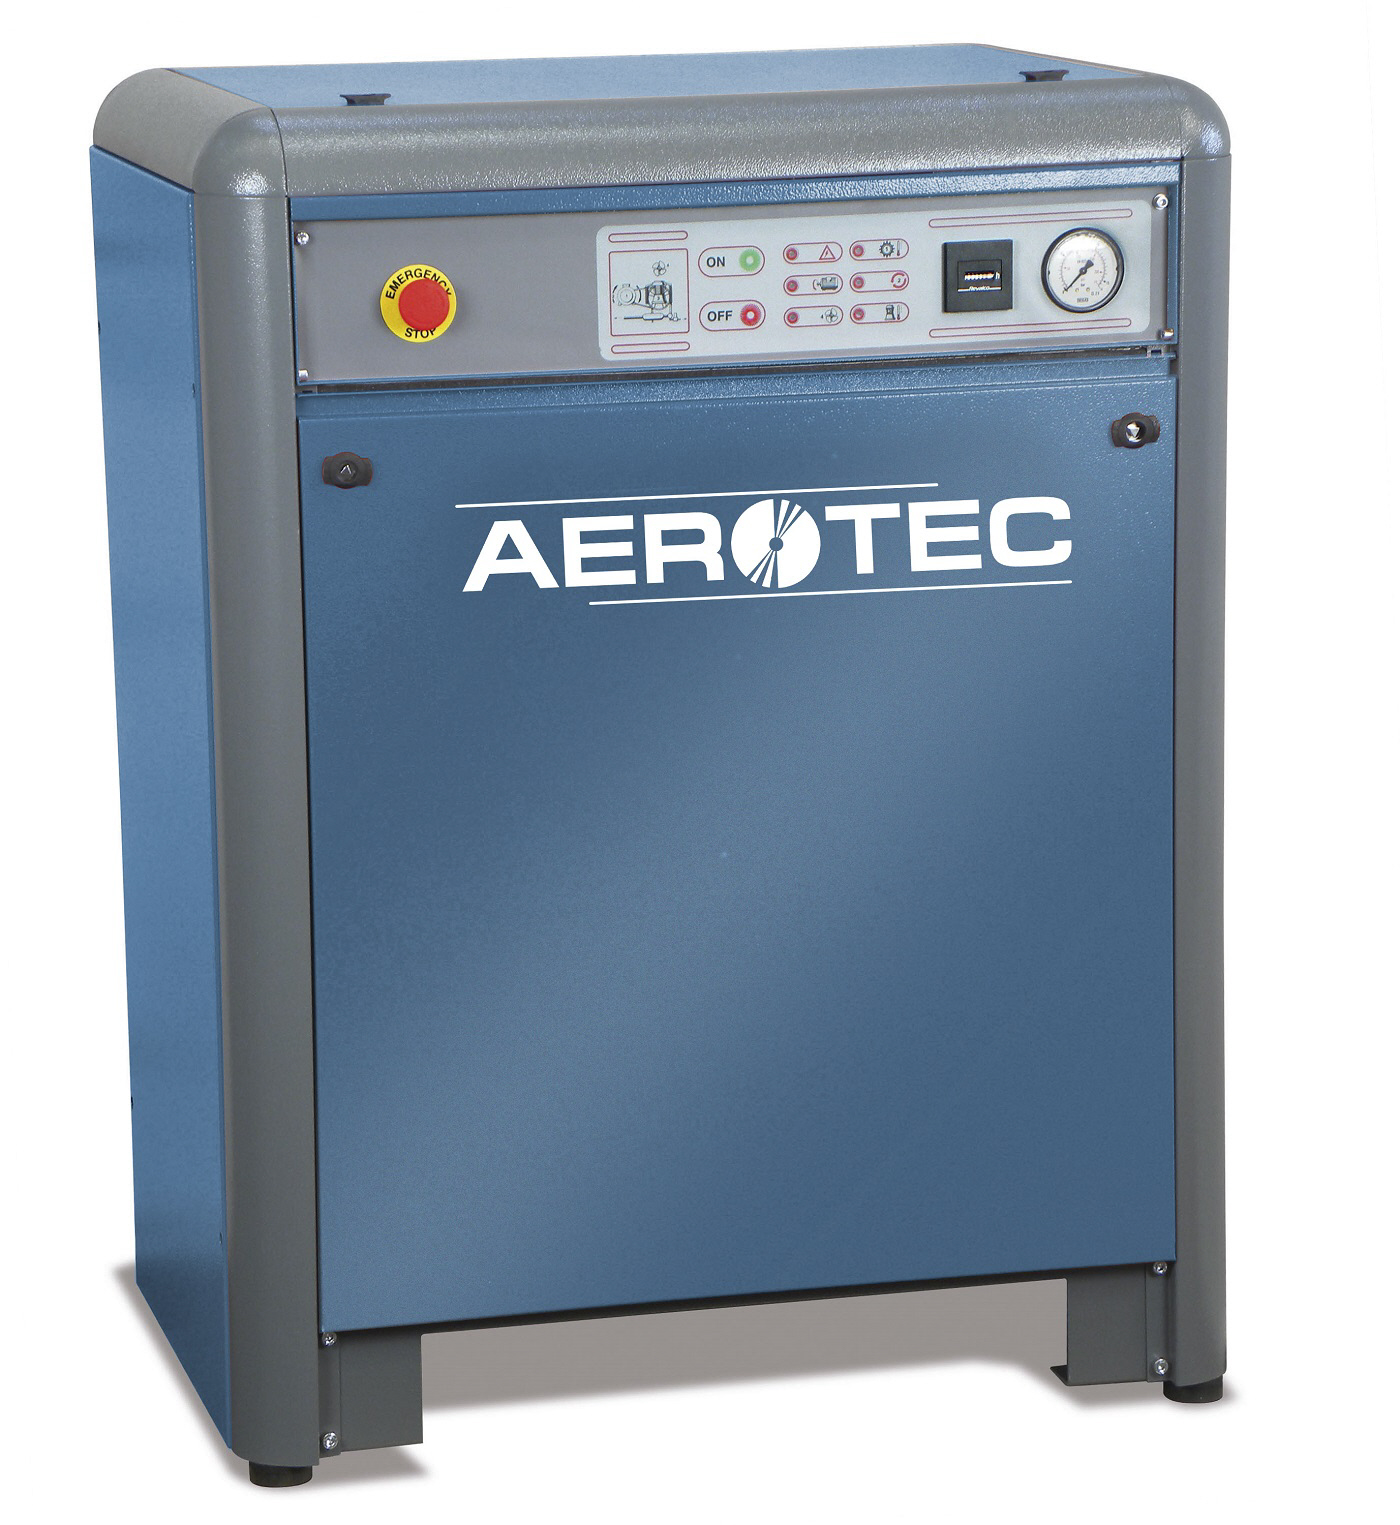 AEROTEC Kolbenkompressor Silent Basis PRO B-AK50-15 mit ST Schaltung Stationäre schallgedämmte Kompressoren